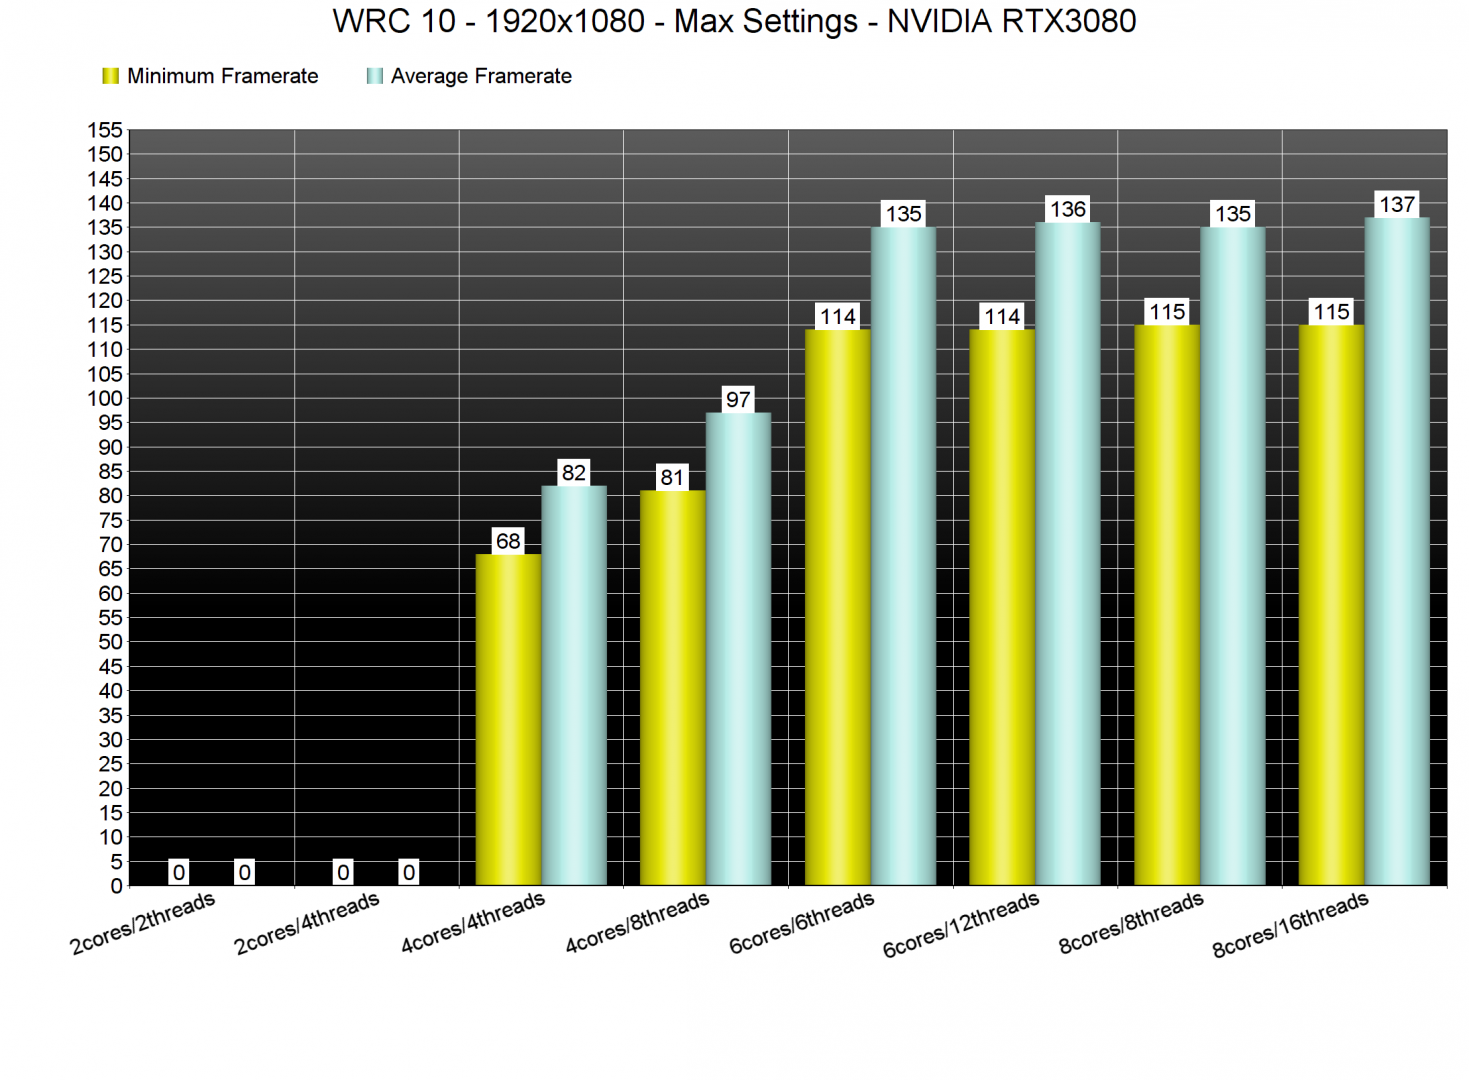 WRC 10 CPU benchmarks